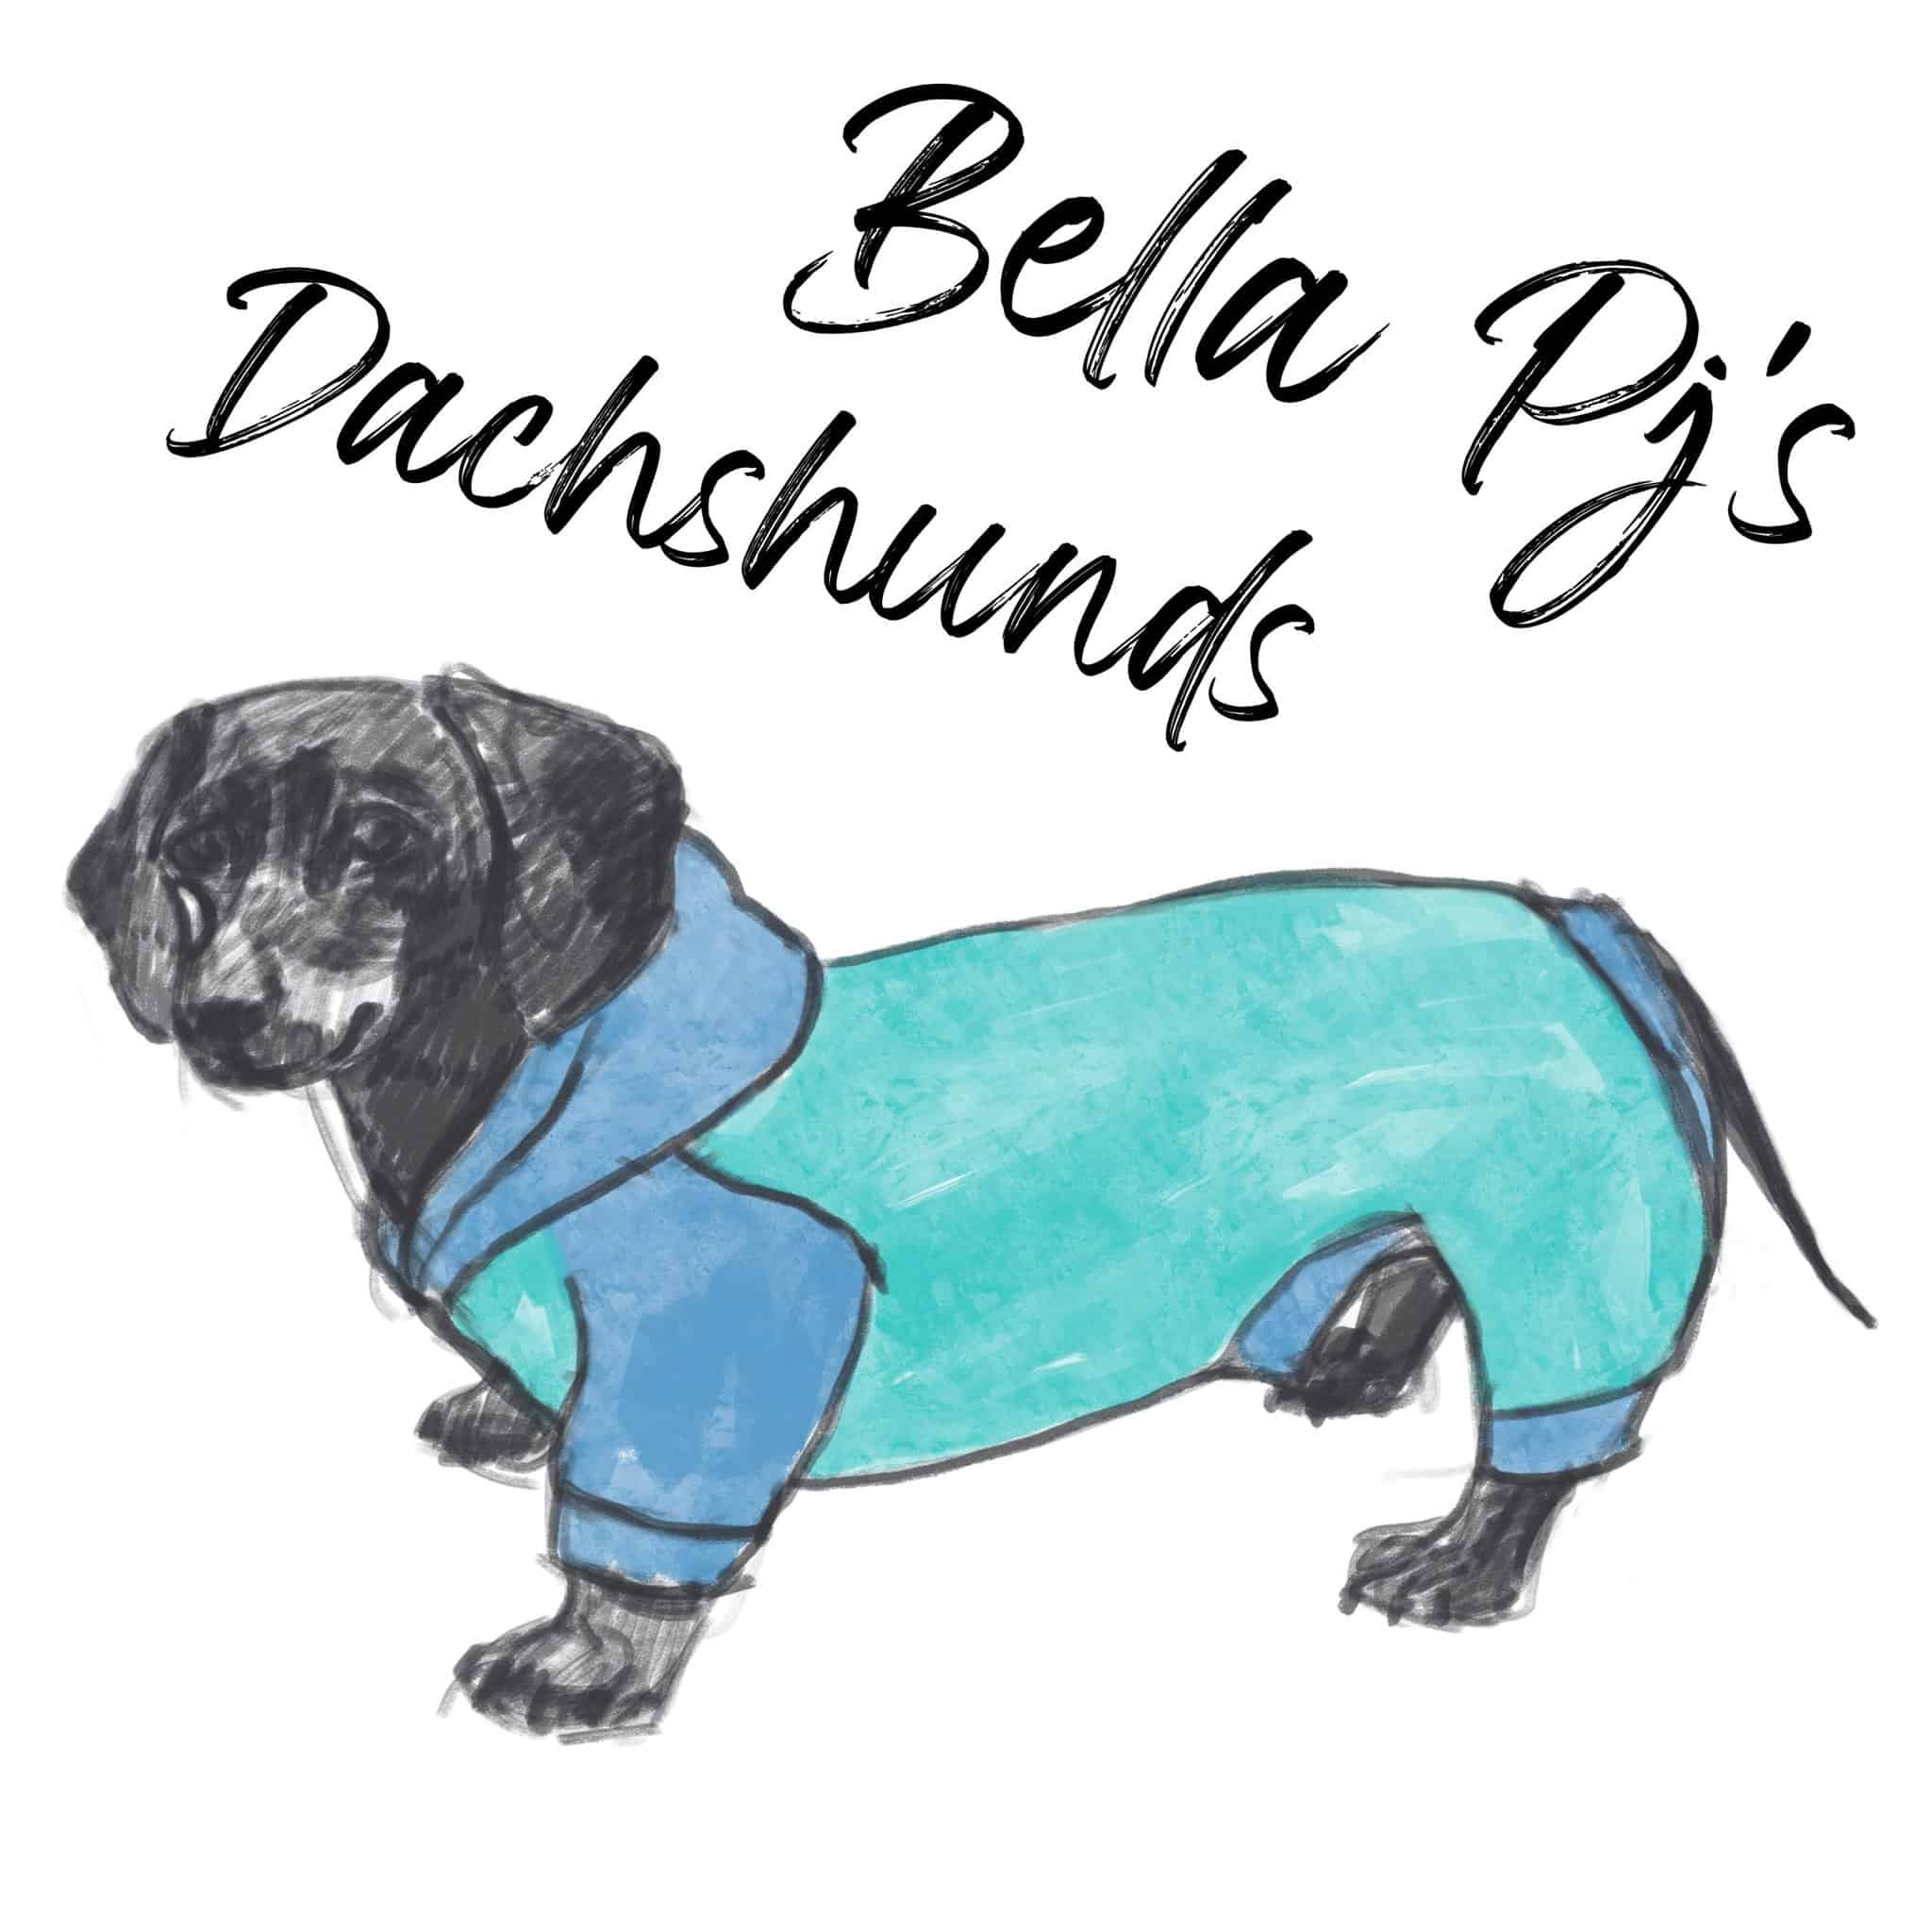 5 Sizes Dachshund Clothes Sewing Pattern - Bella Pyjama - The Tailoress PDF Sewing Patterns